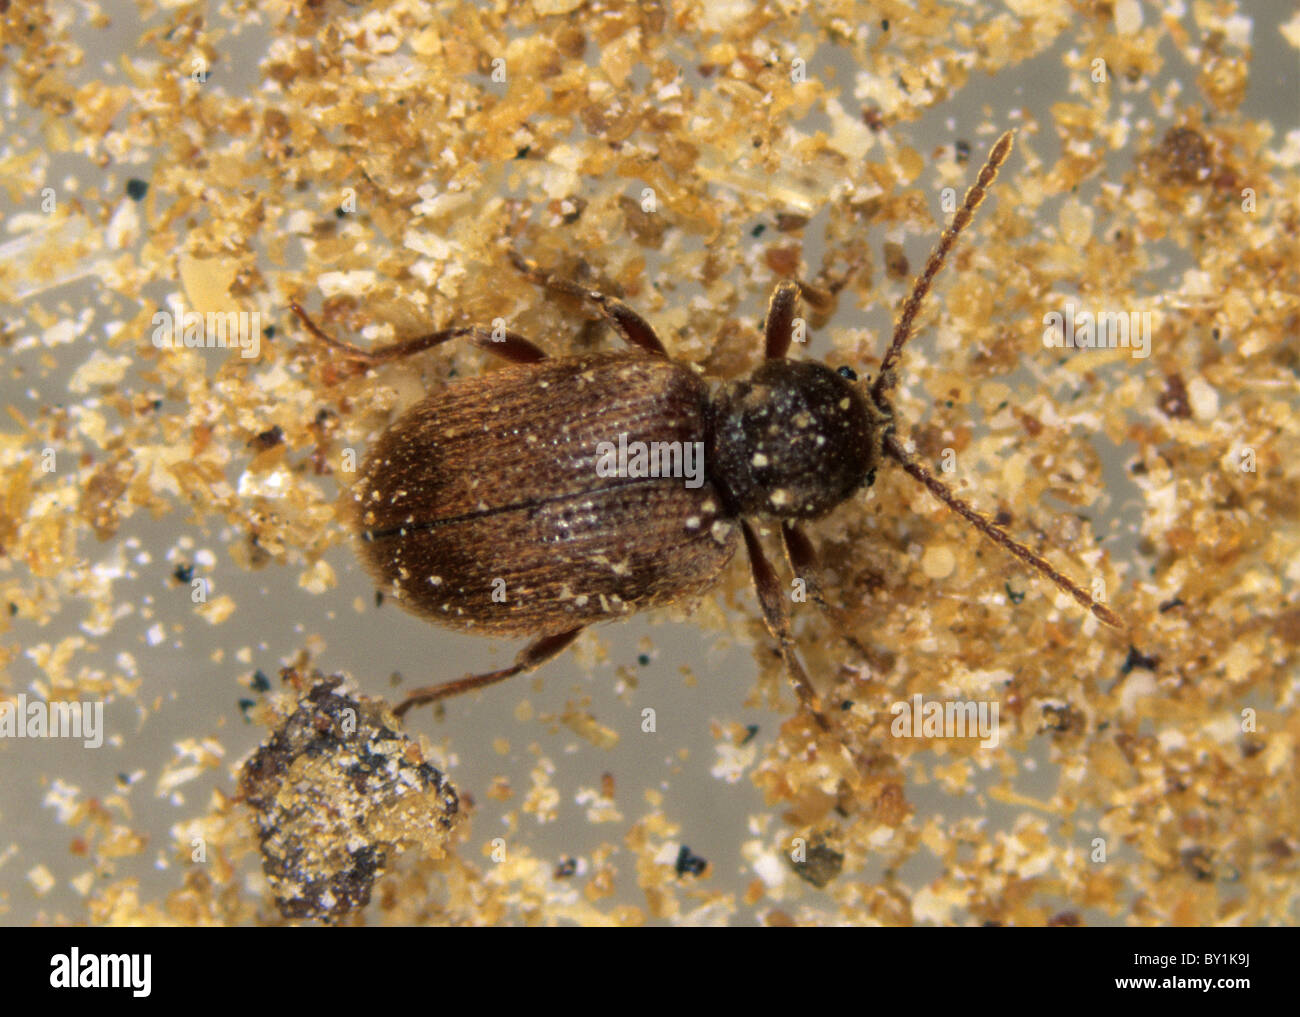 Australian spider beetle (Ptinus tectus) adult Stock Photo